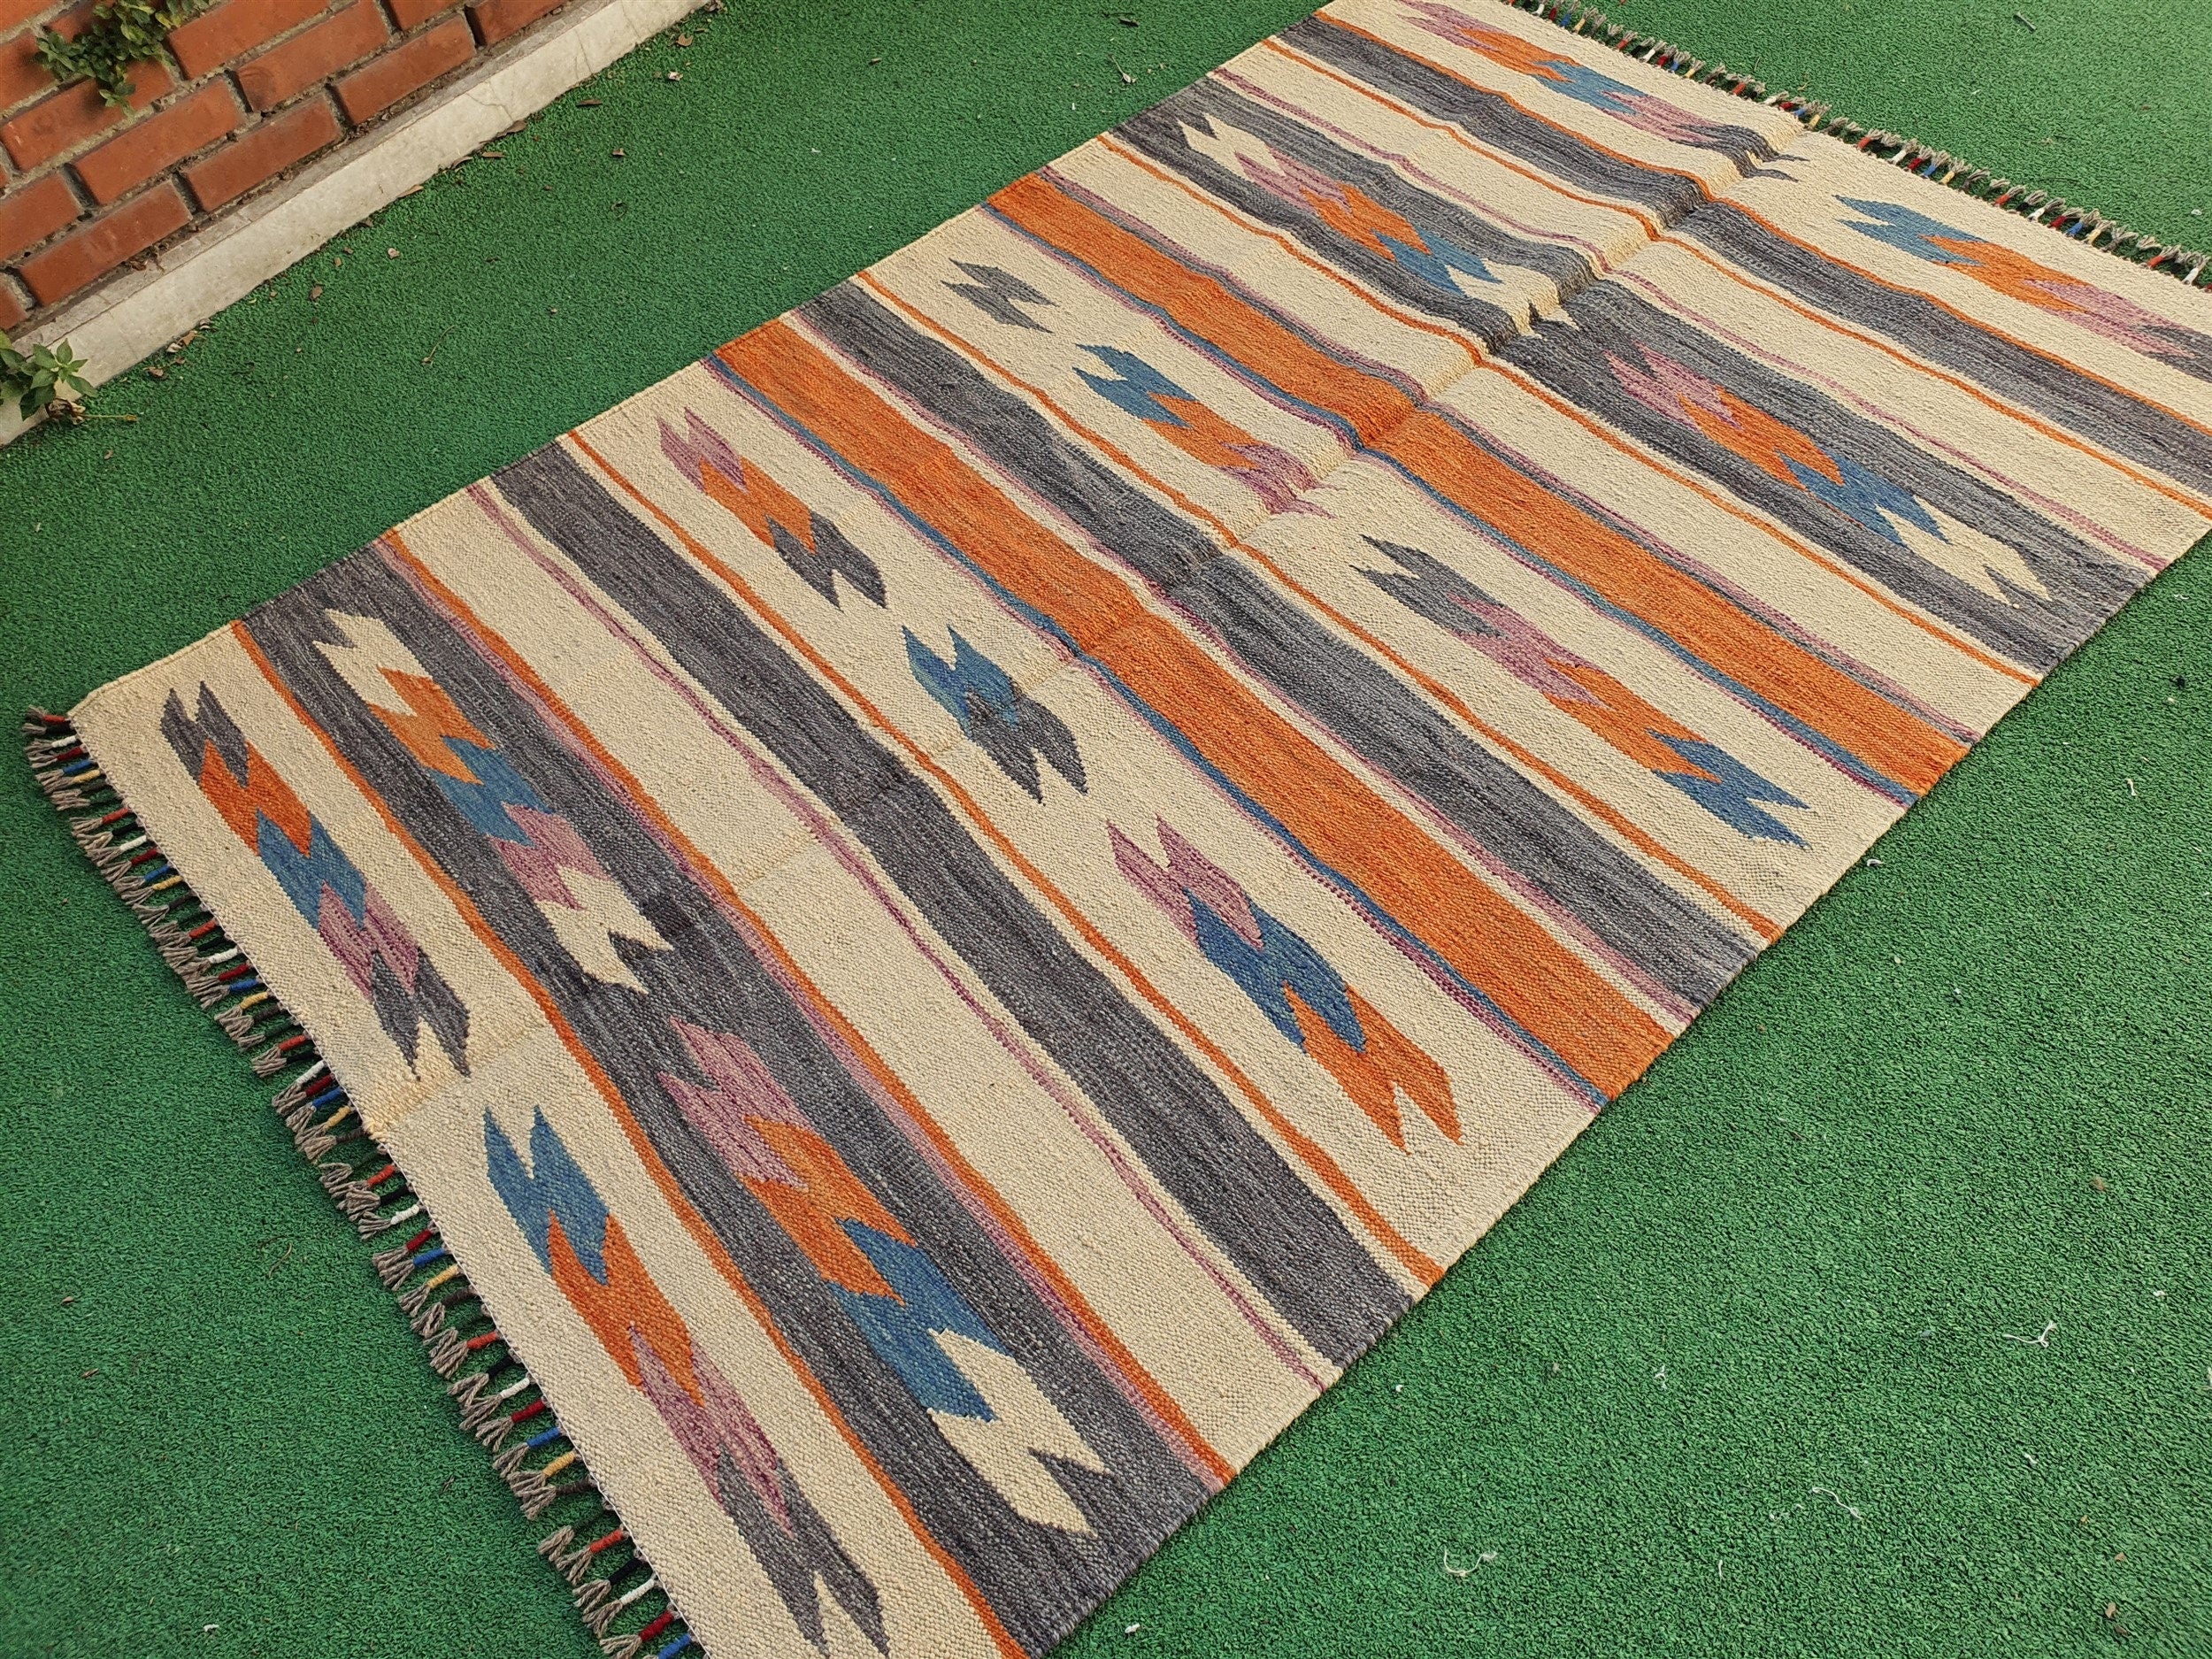 Vintage Turkish Kilim Rug, Moroccan Carpet, Anatolian Handmade Organic Wool Kilim Rug, Bohemian Rustic Decor Persian Area Rug 5'8"x3'9"